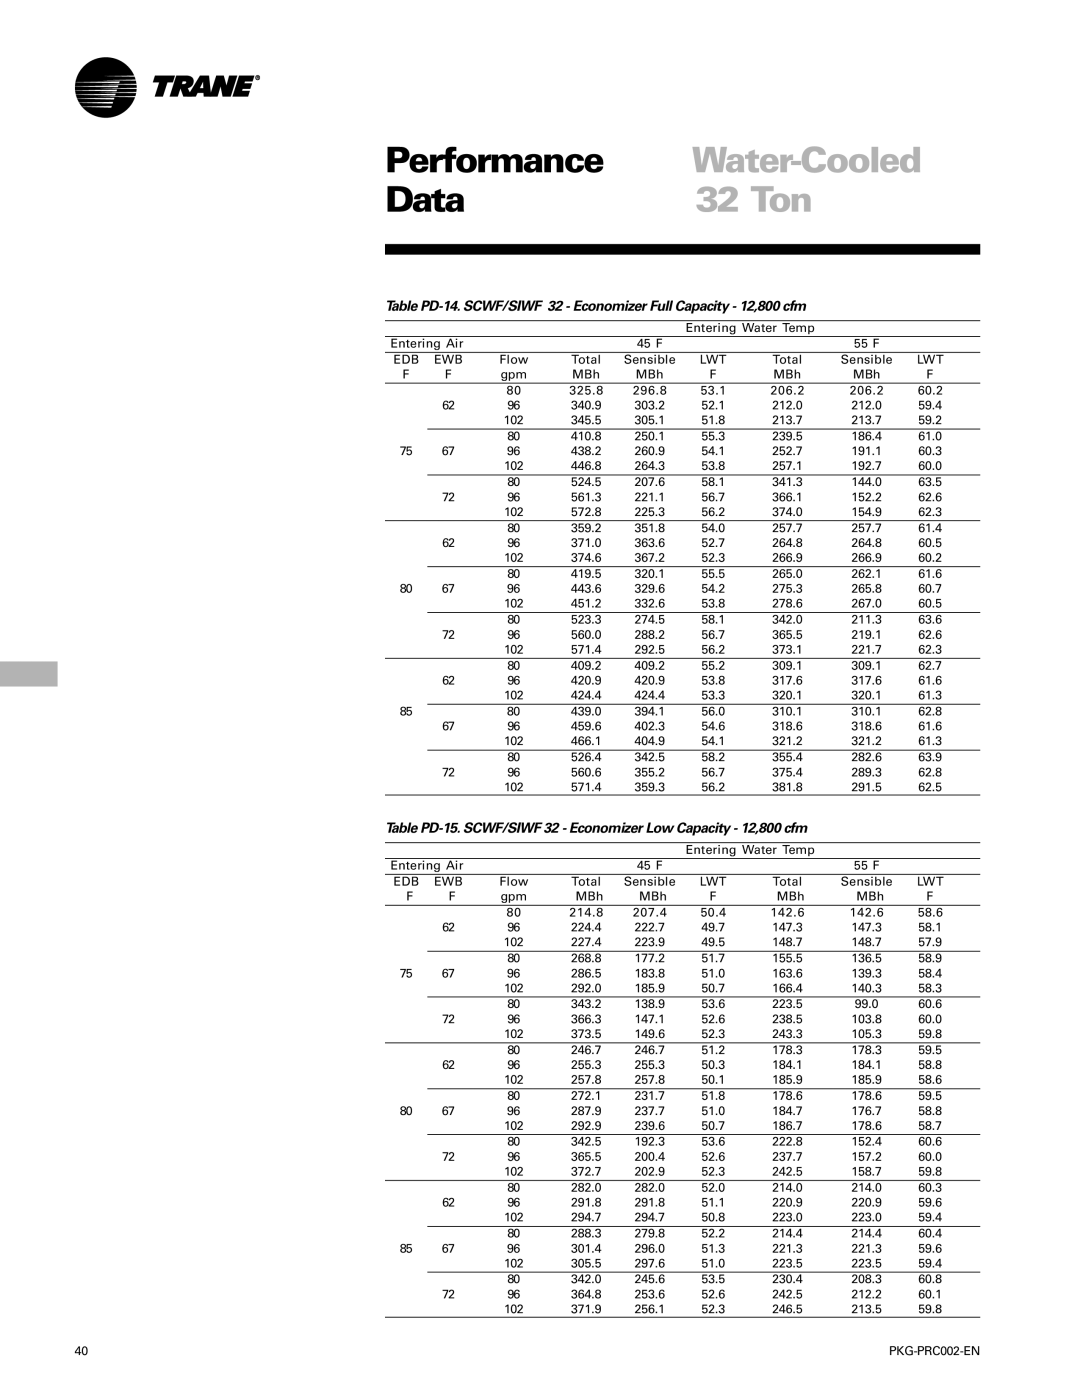 Trane PKG-PRC002-EN manual 32 Ton, Table PD-15. SCWF/SIWF 32 Economizer Low Capacity 12,800 cfm 